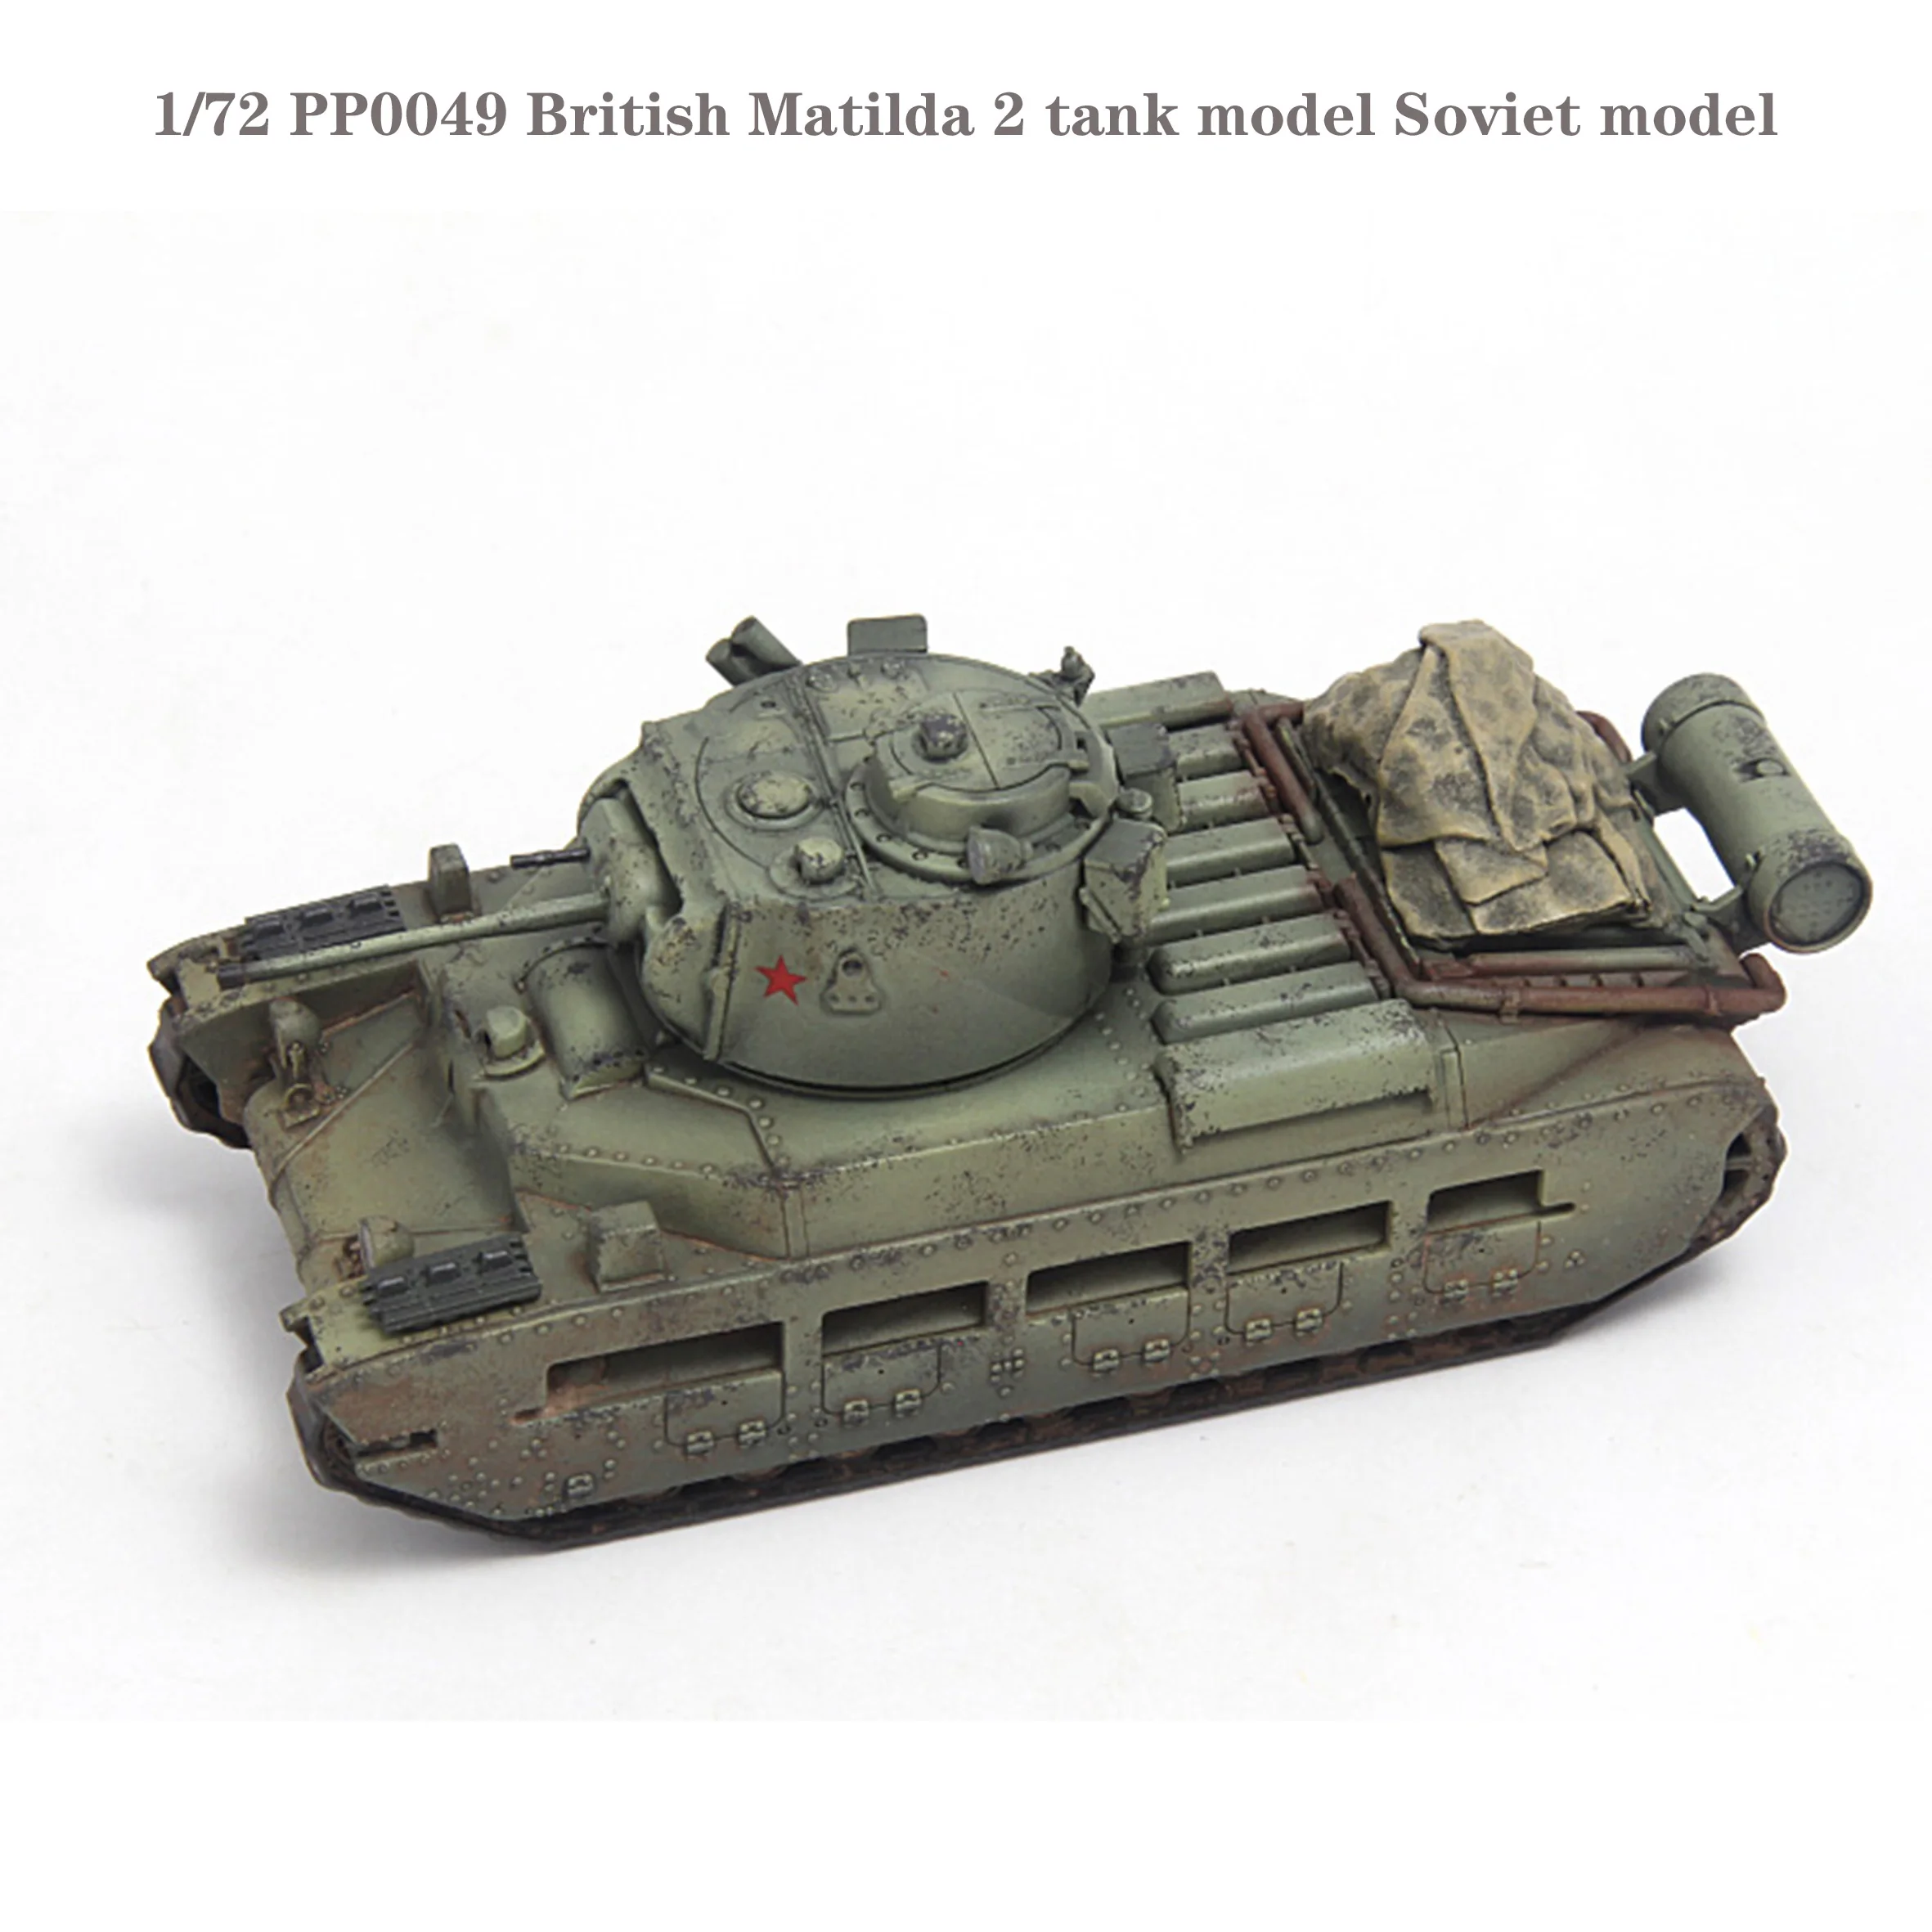 

1/72 PP0049 British Matilda 2 tank model Soviet model Finished product model